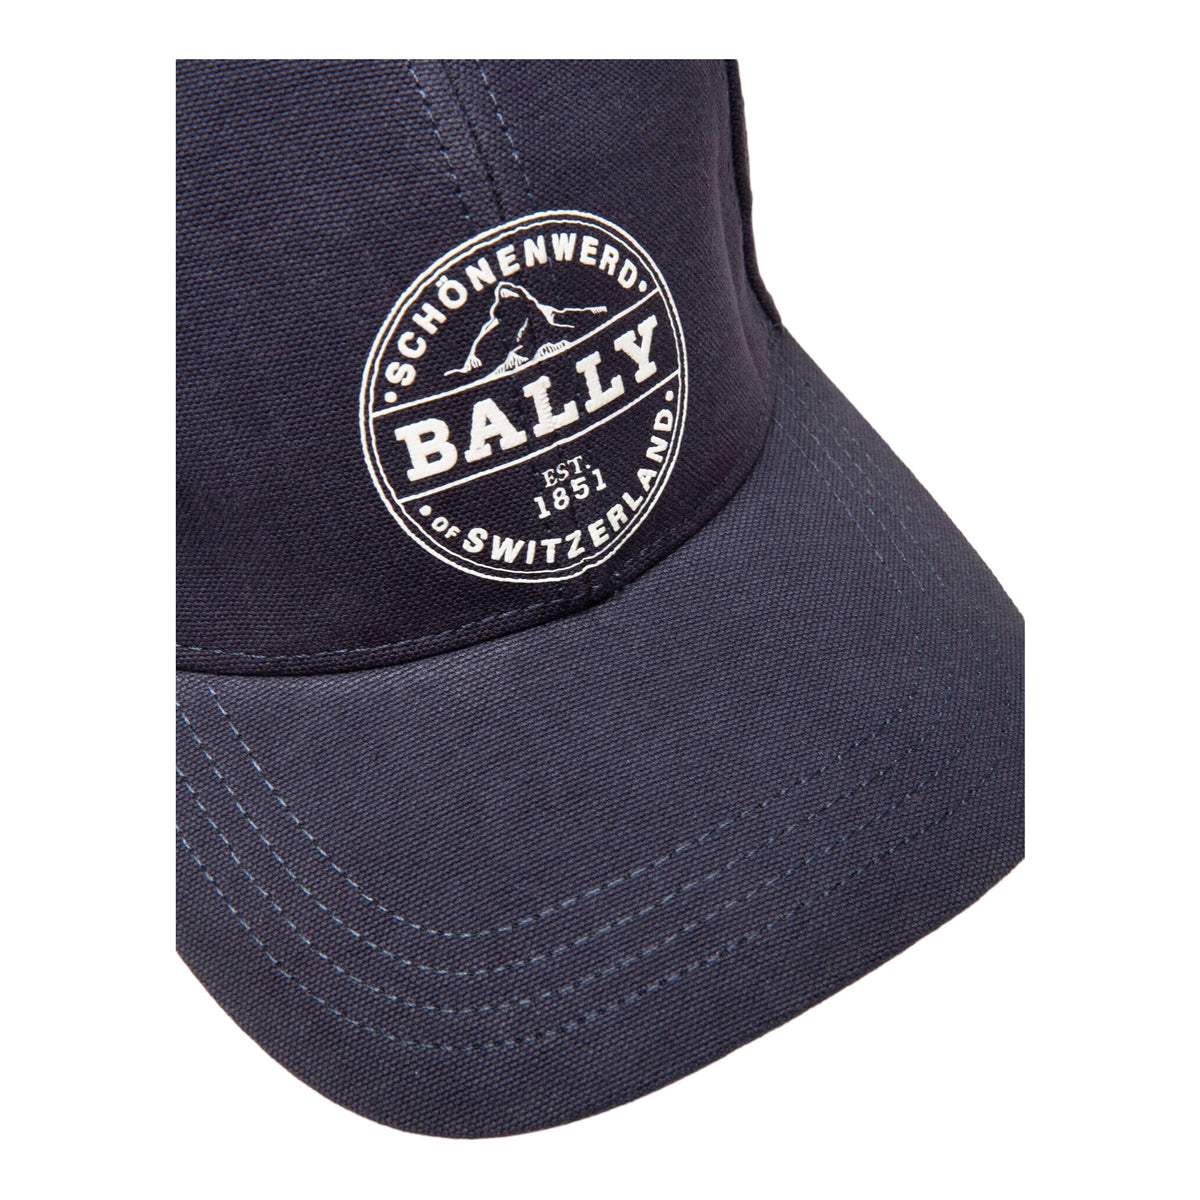 Bally Baseball Cap